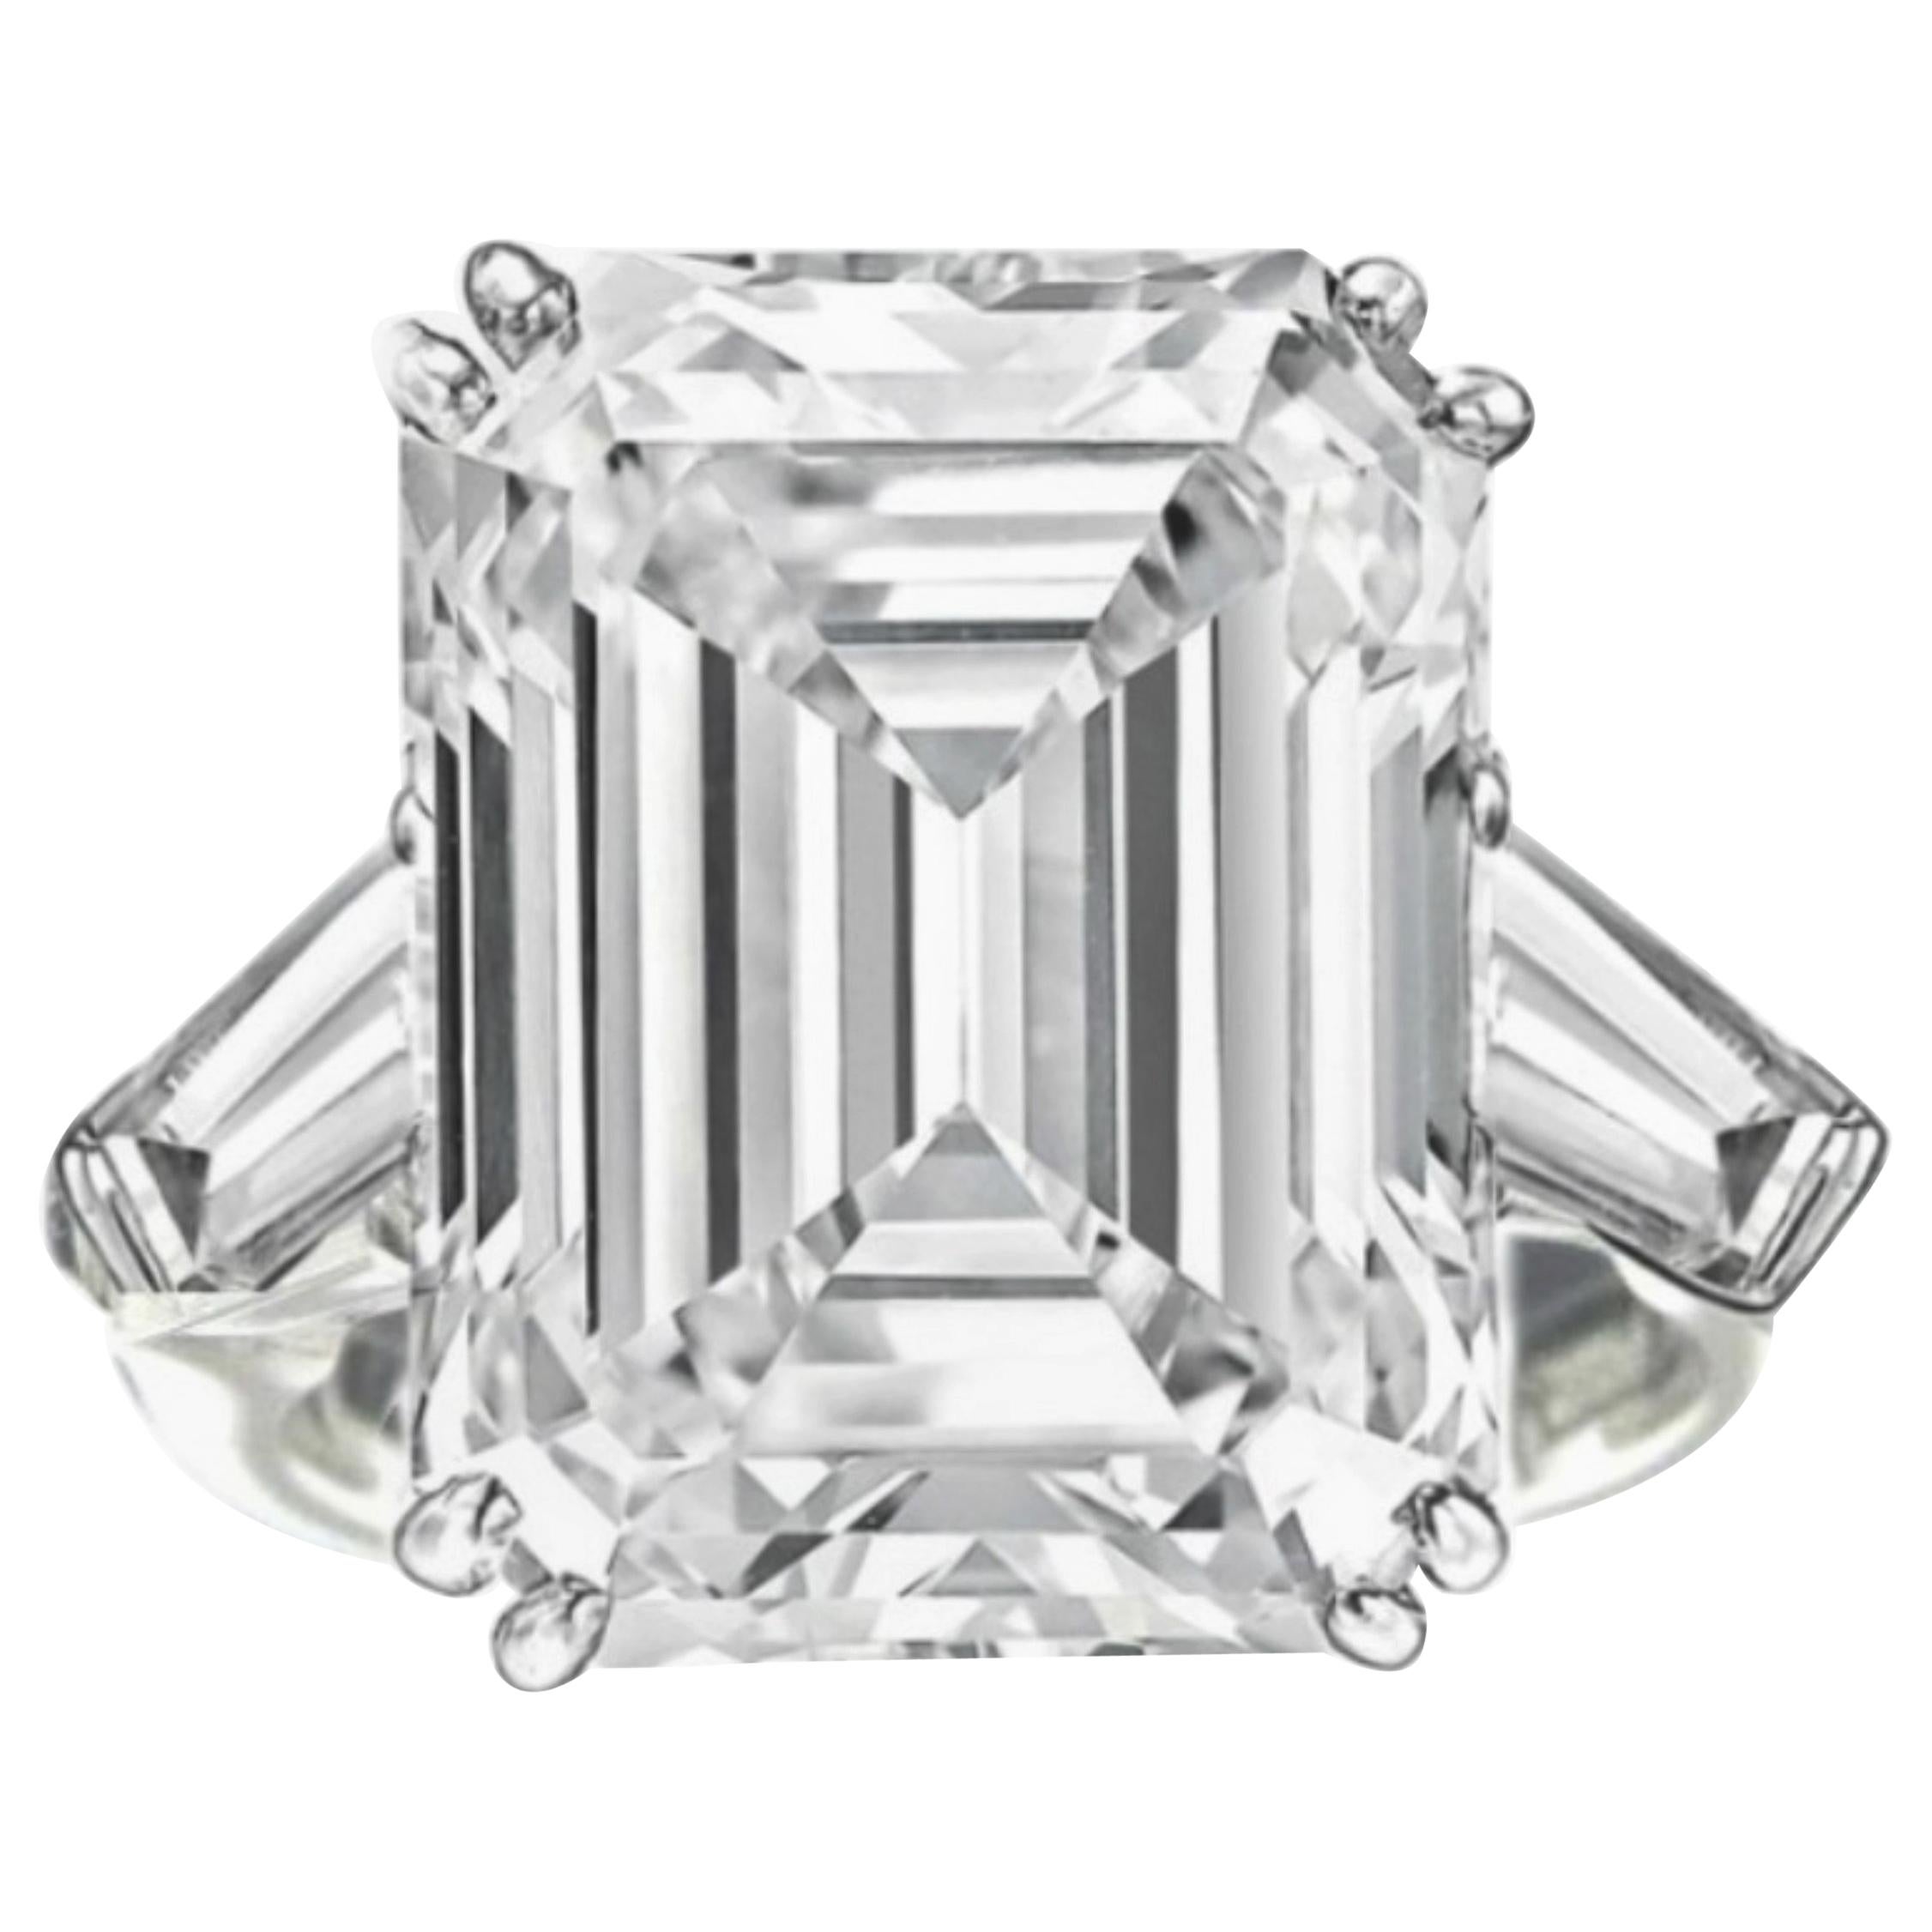 GIA Certified 11.34 Carat H-VS1 Emerald Cut Diamond Ring